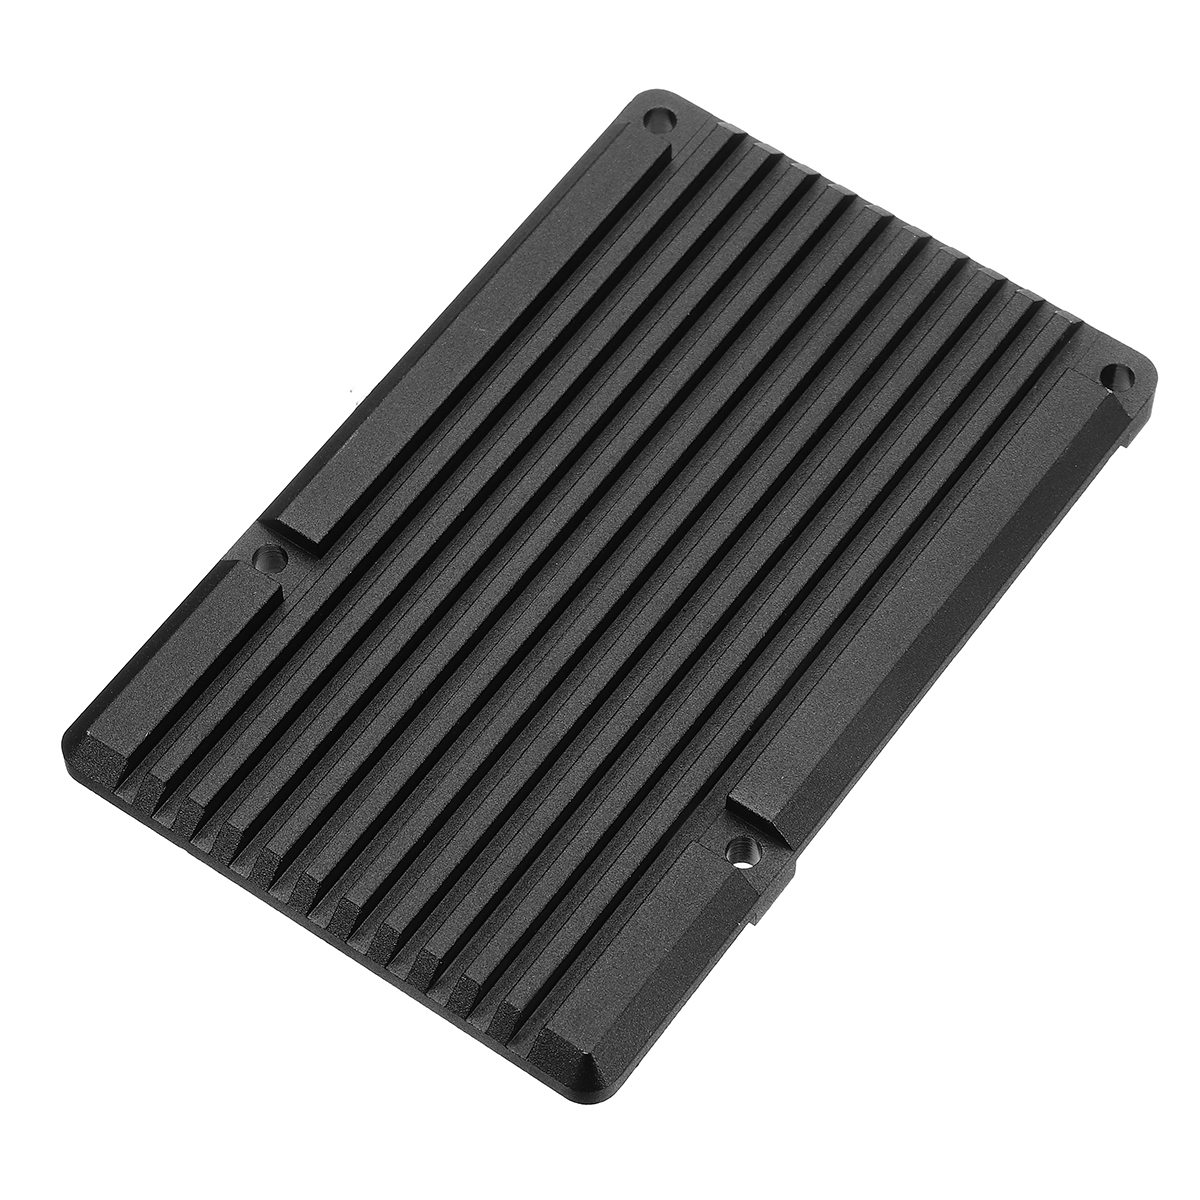 Black-Aluminum-Alloy-Protective-Shell-Metal-Case-Built-in-Heatsink-for-Raspberry-Pi-3B-3B-1634770